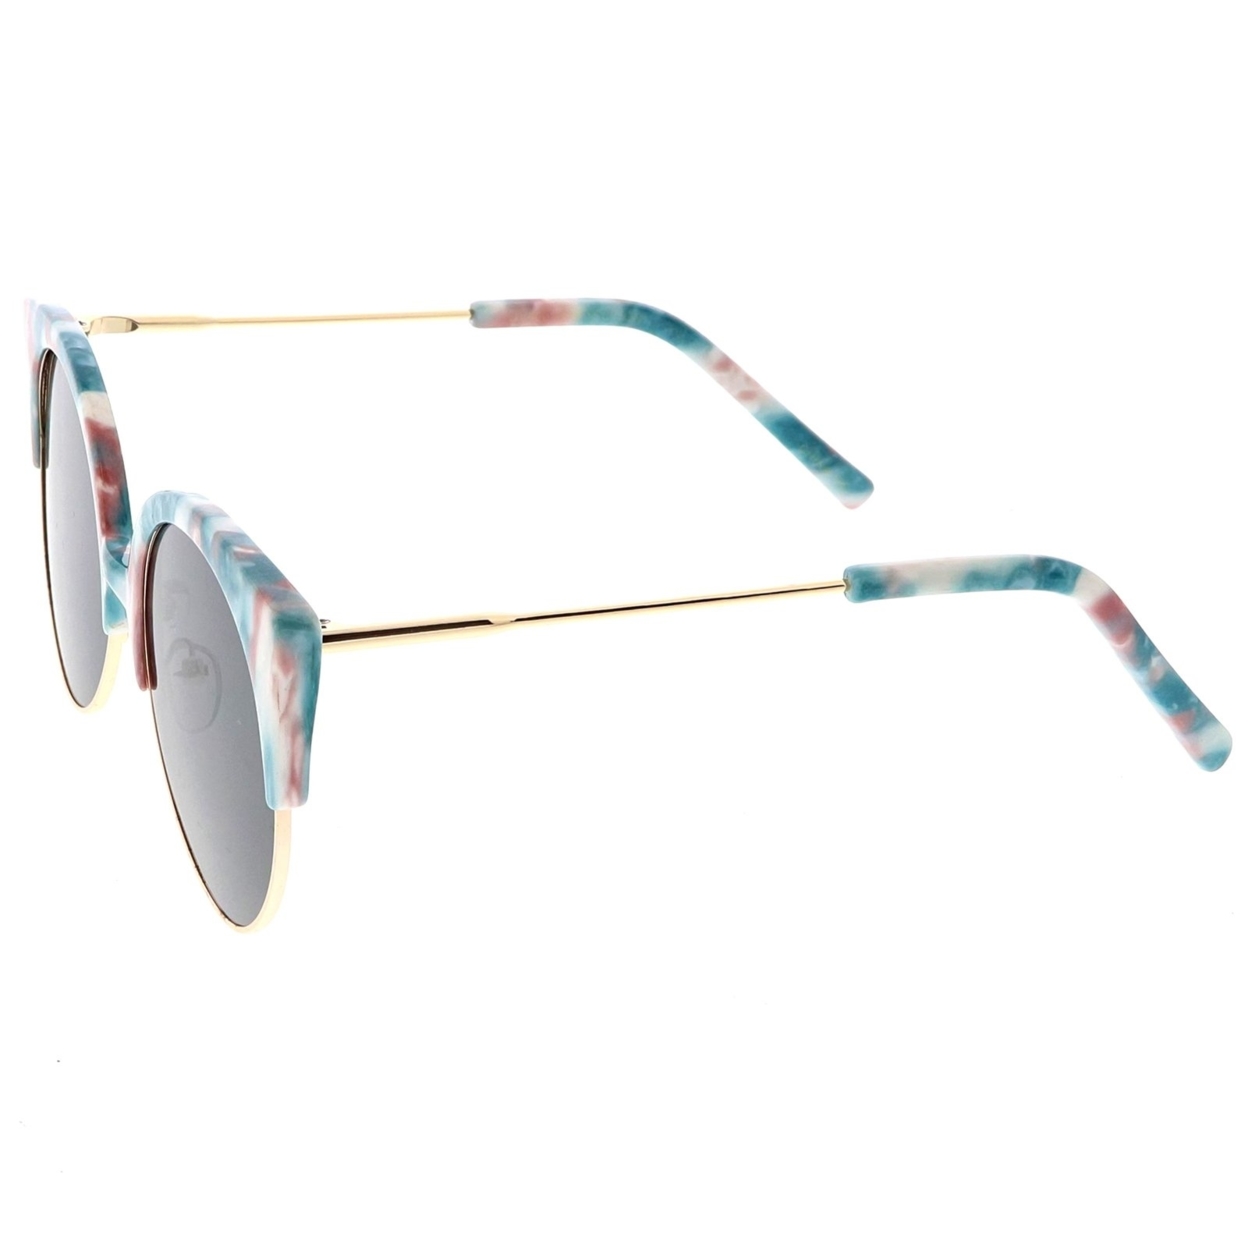 Women's Half Frame Cat Eye Sunglasses Ultra Slim Arms Round Flat Lens 53mm - Blue Red Gold / Smoke